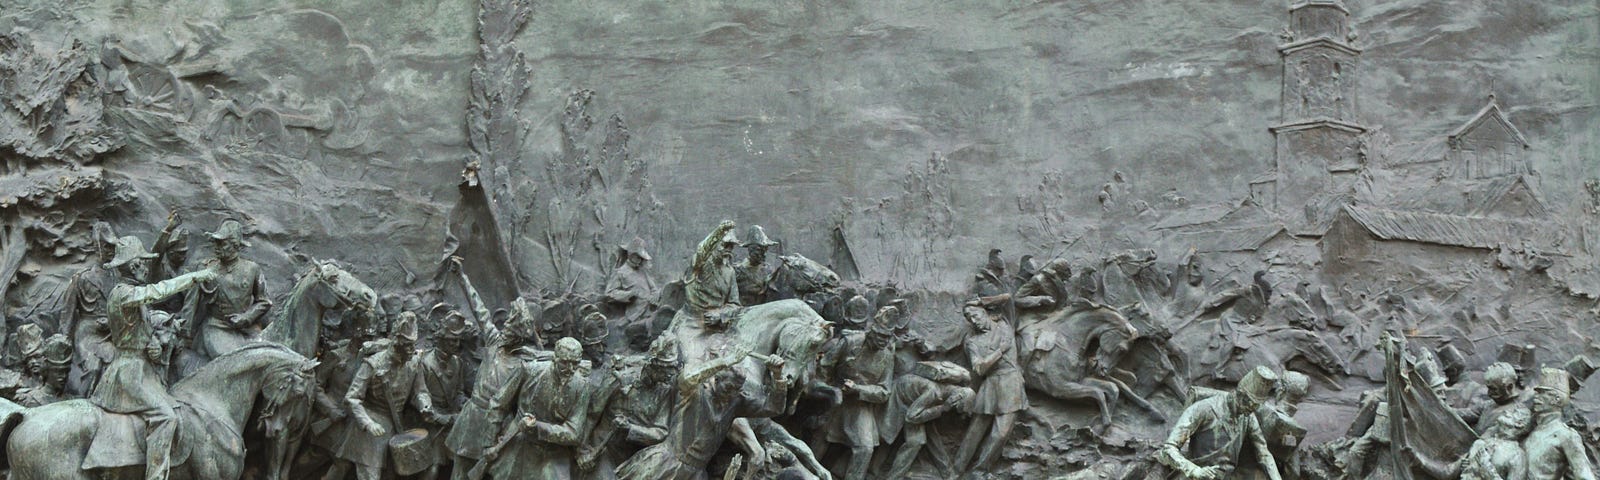 Bas-relief stone mural of revolutionary war.